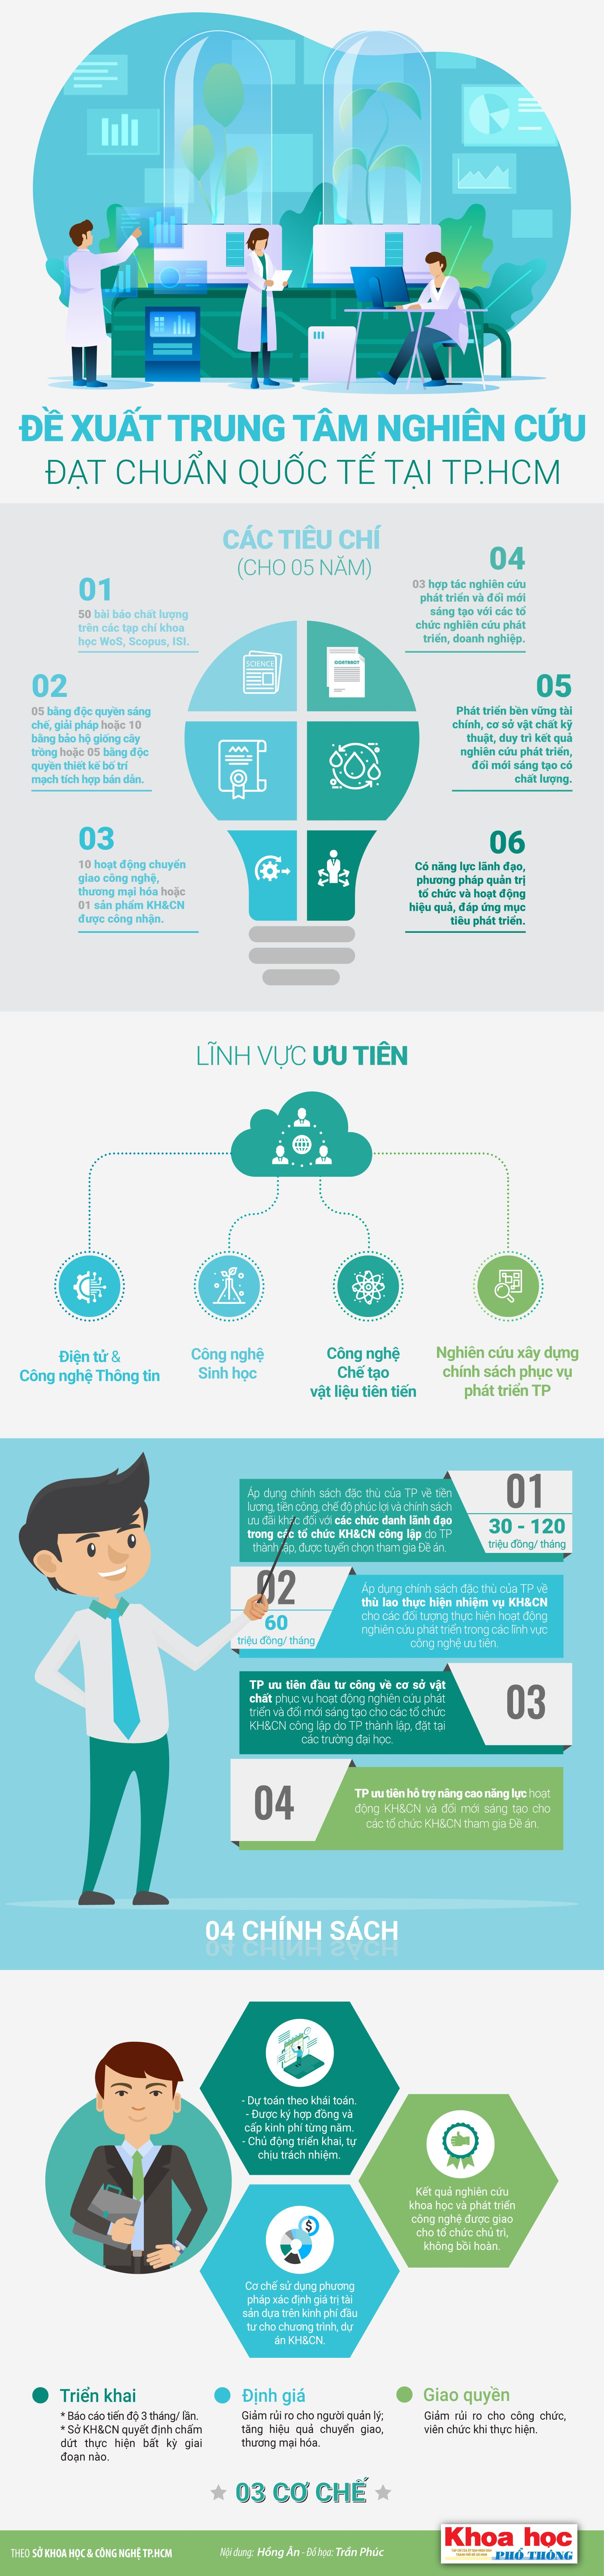 khpto-infographic-trung-tam-nghien-cuu-dat-chuan-quoc-te-f.png